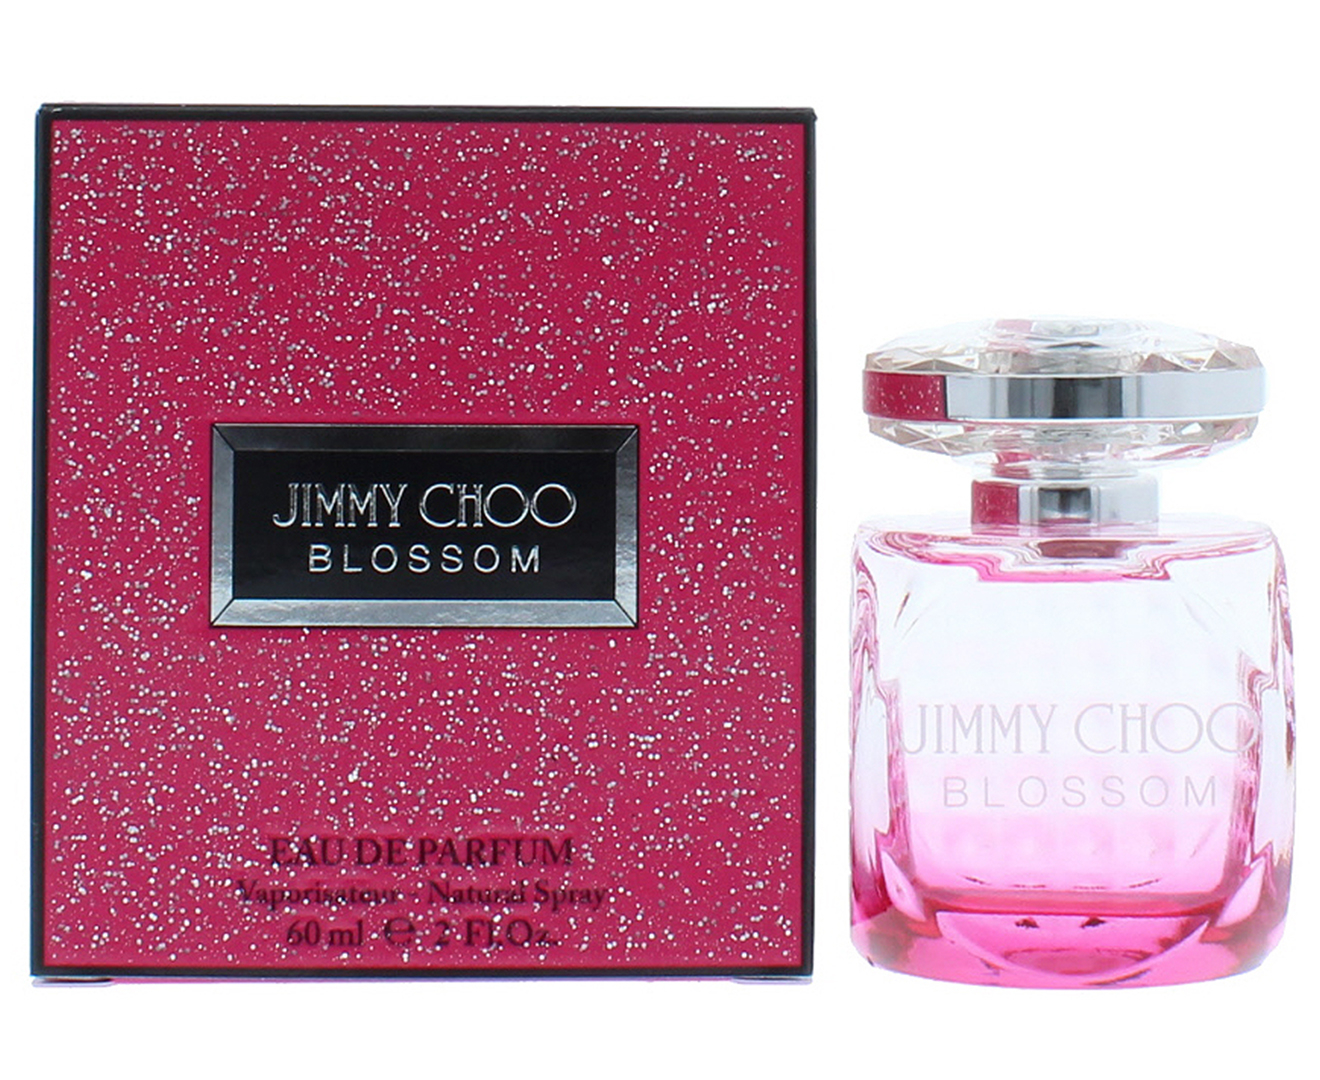 Jimmy Choo Blossom For Women EDP Perfume 60mL | Catch.com.au